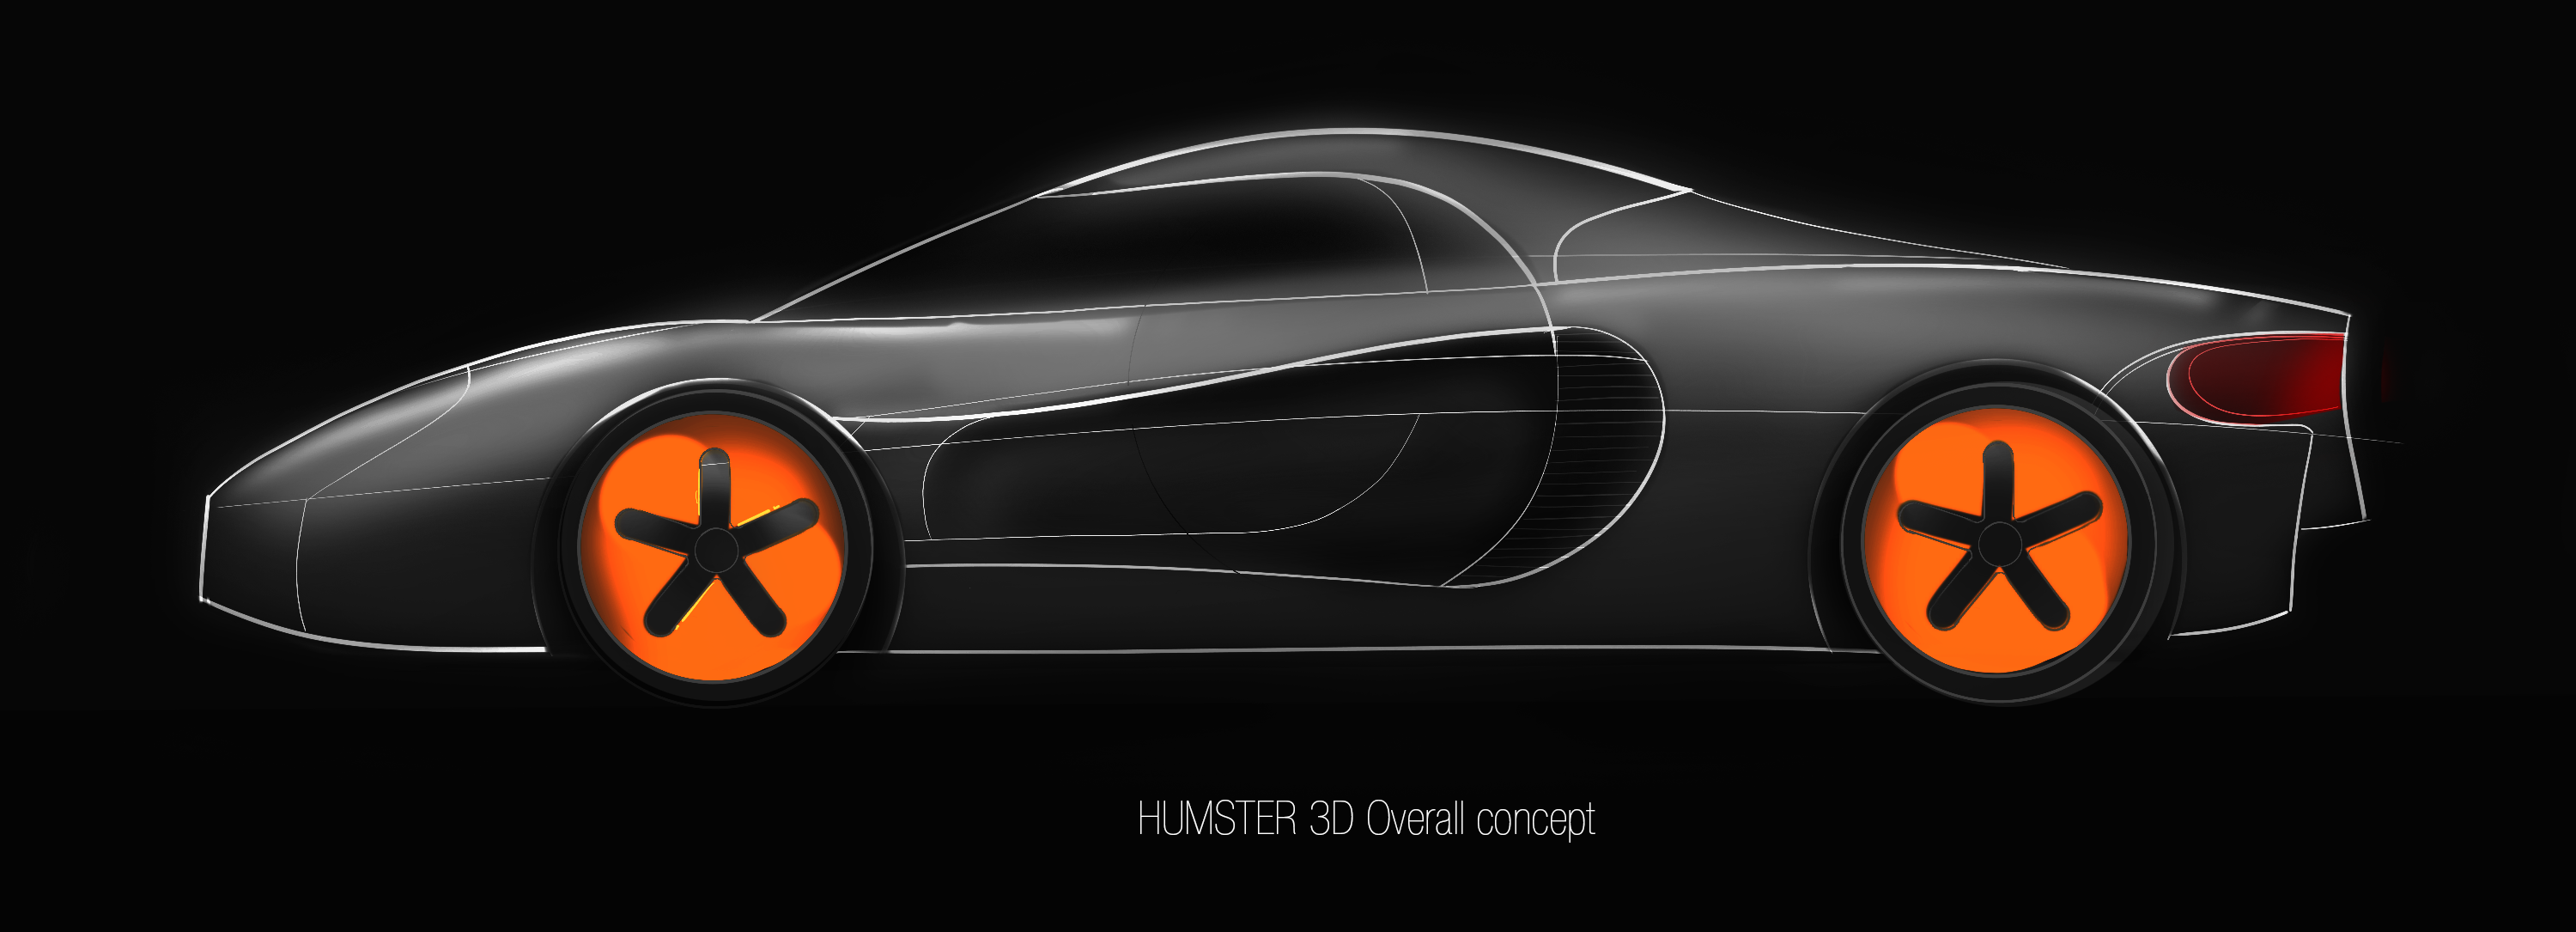 Humster3D car render competition - ROBOT Motors WIP 2